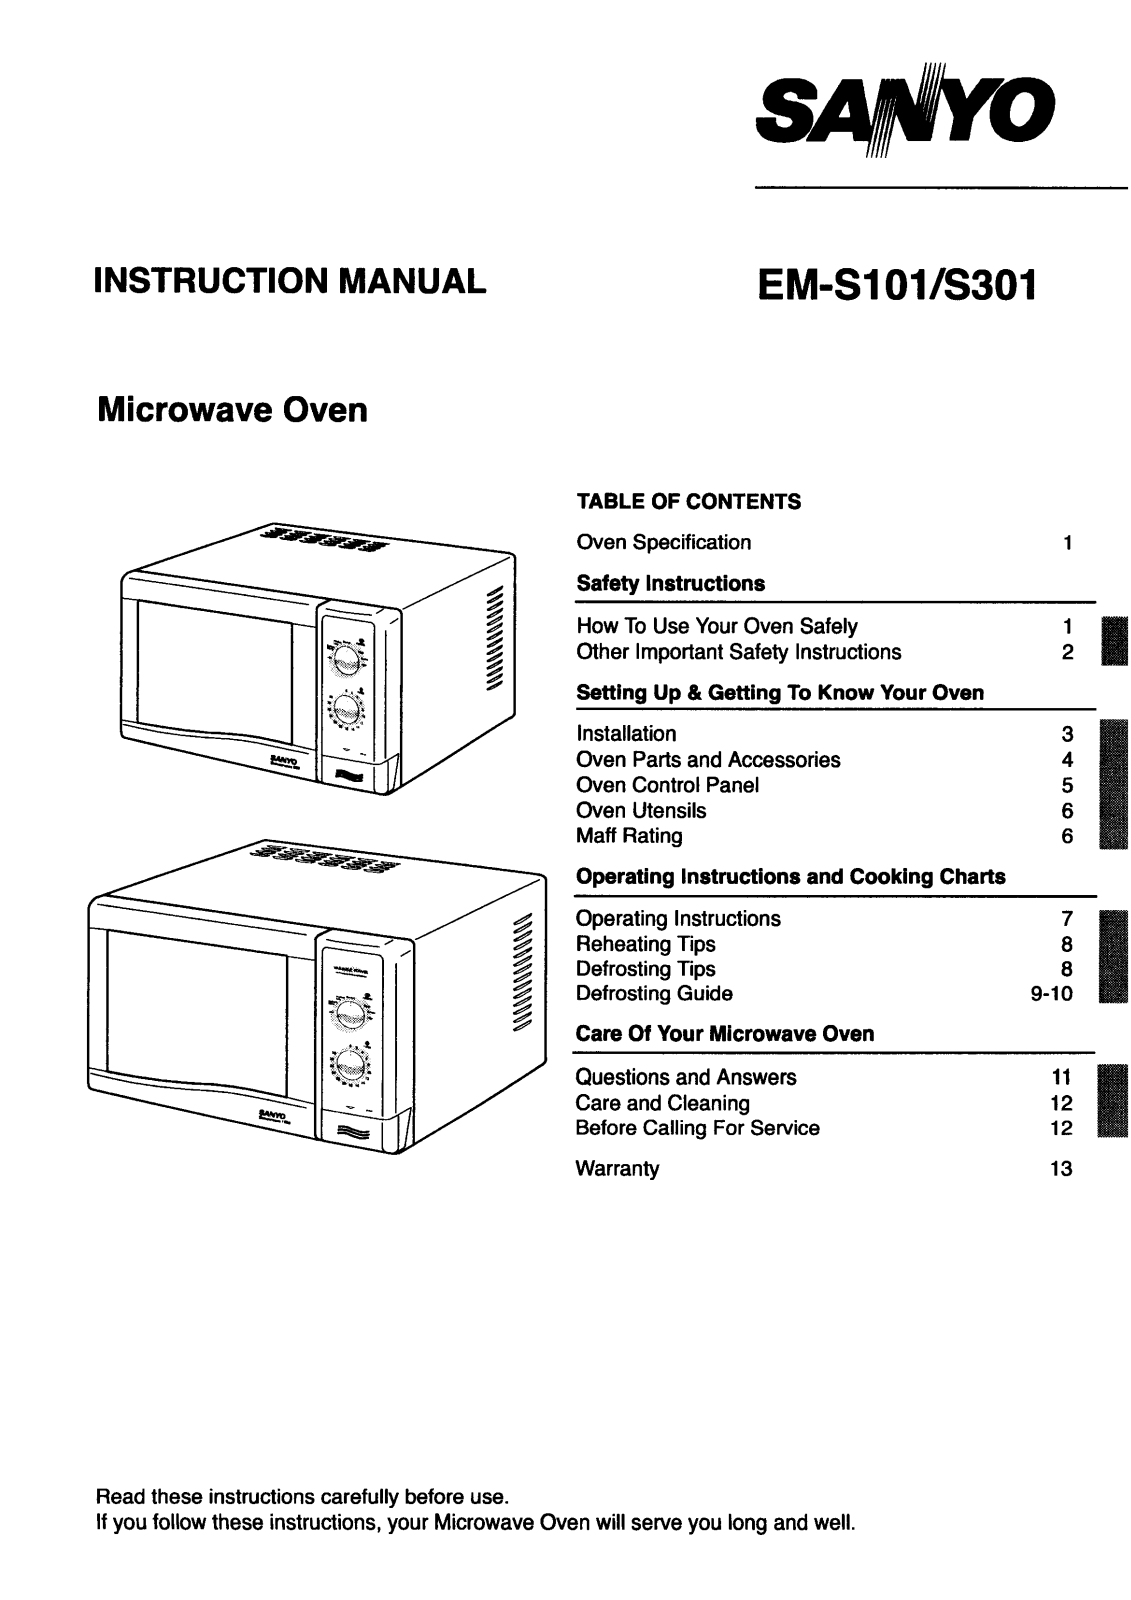 Sanyo EM-S301, EM-S101 Instruction Manual